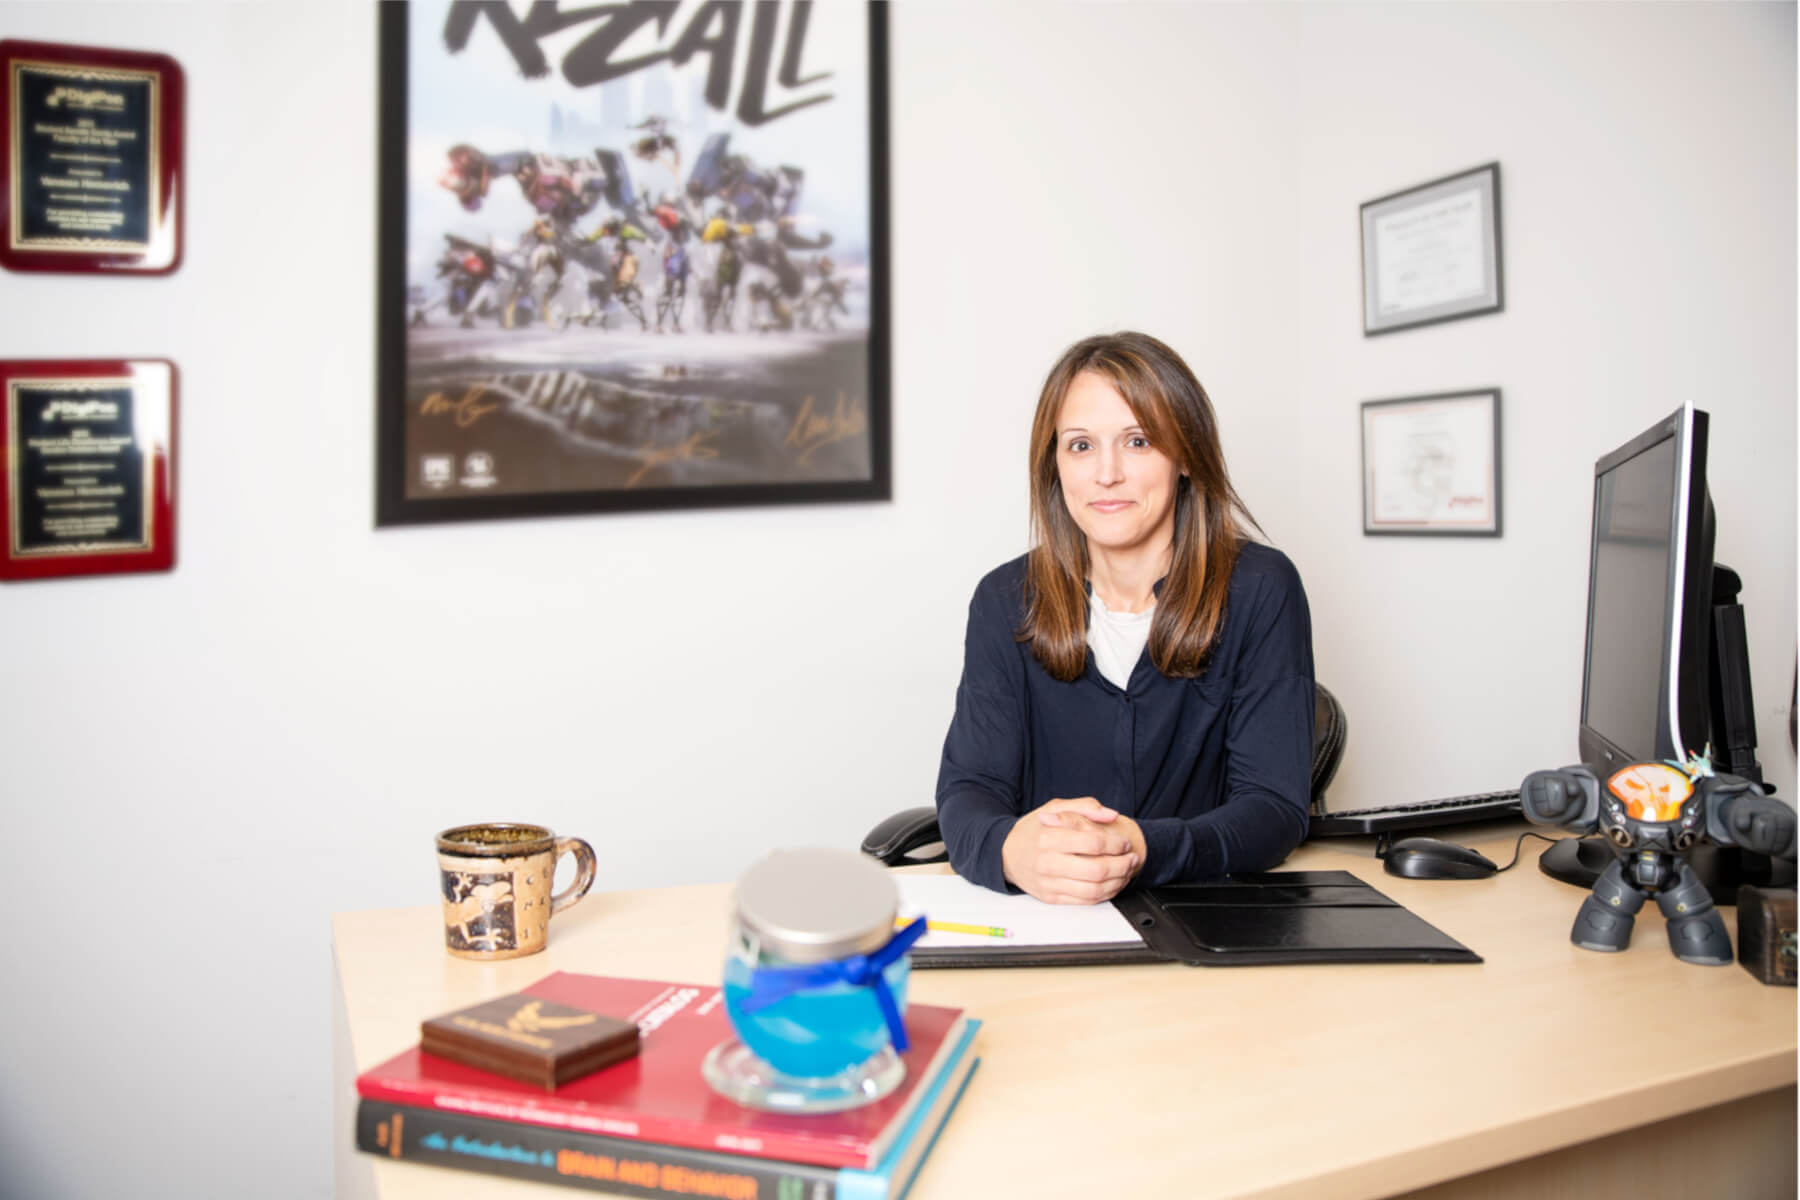 Professor Vanessa Hemovich poses at her desk in her office.